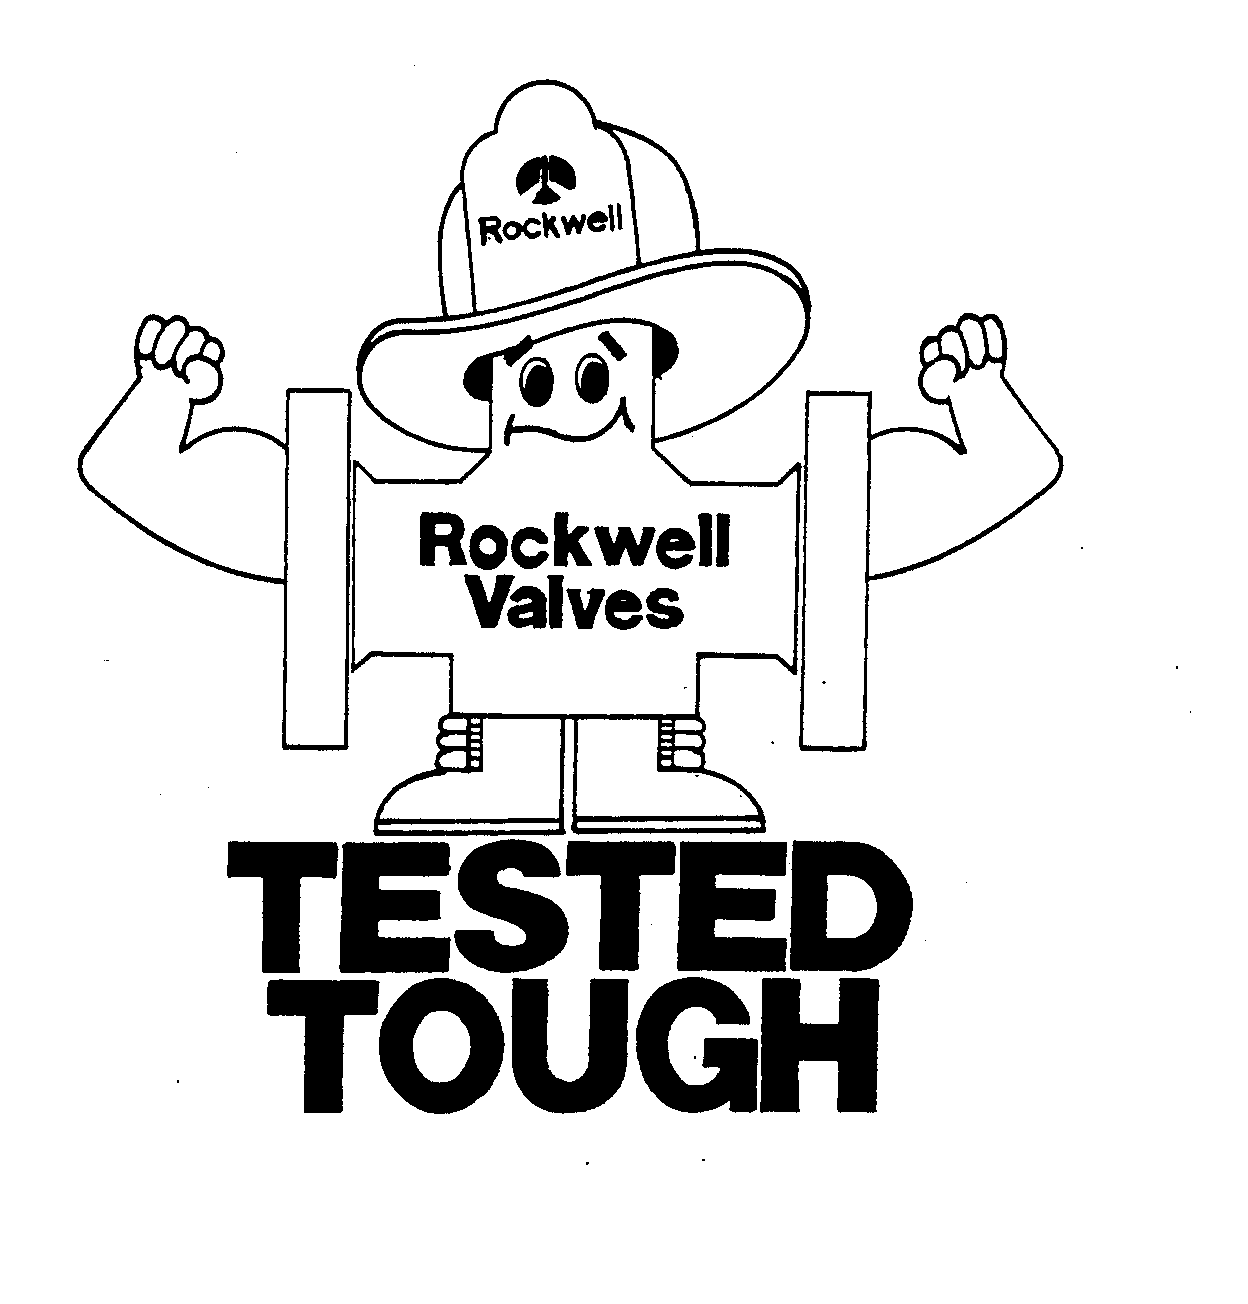  TESTED TOUGH ROCKWELL VALVES